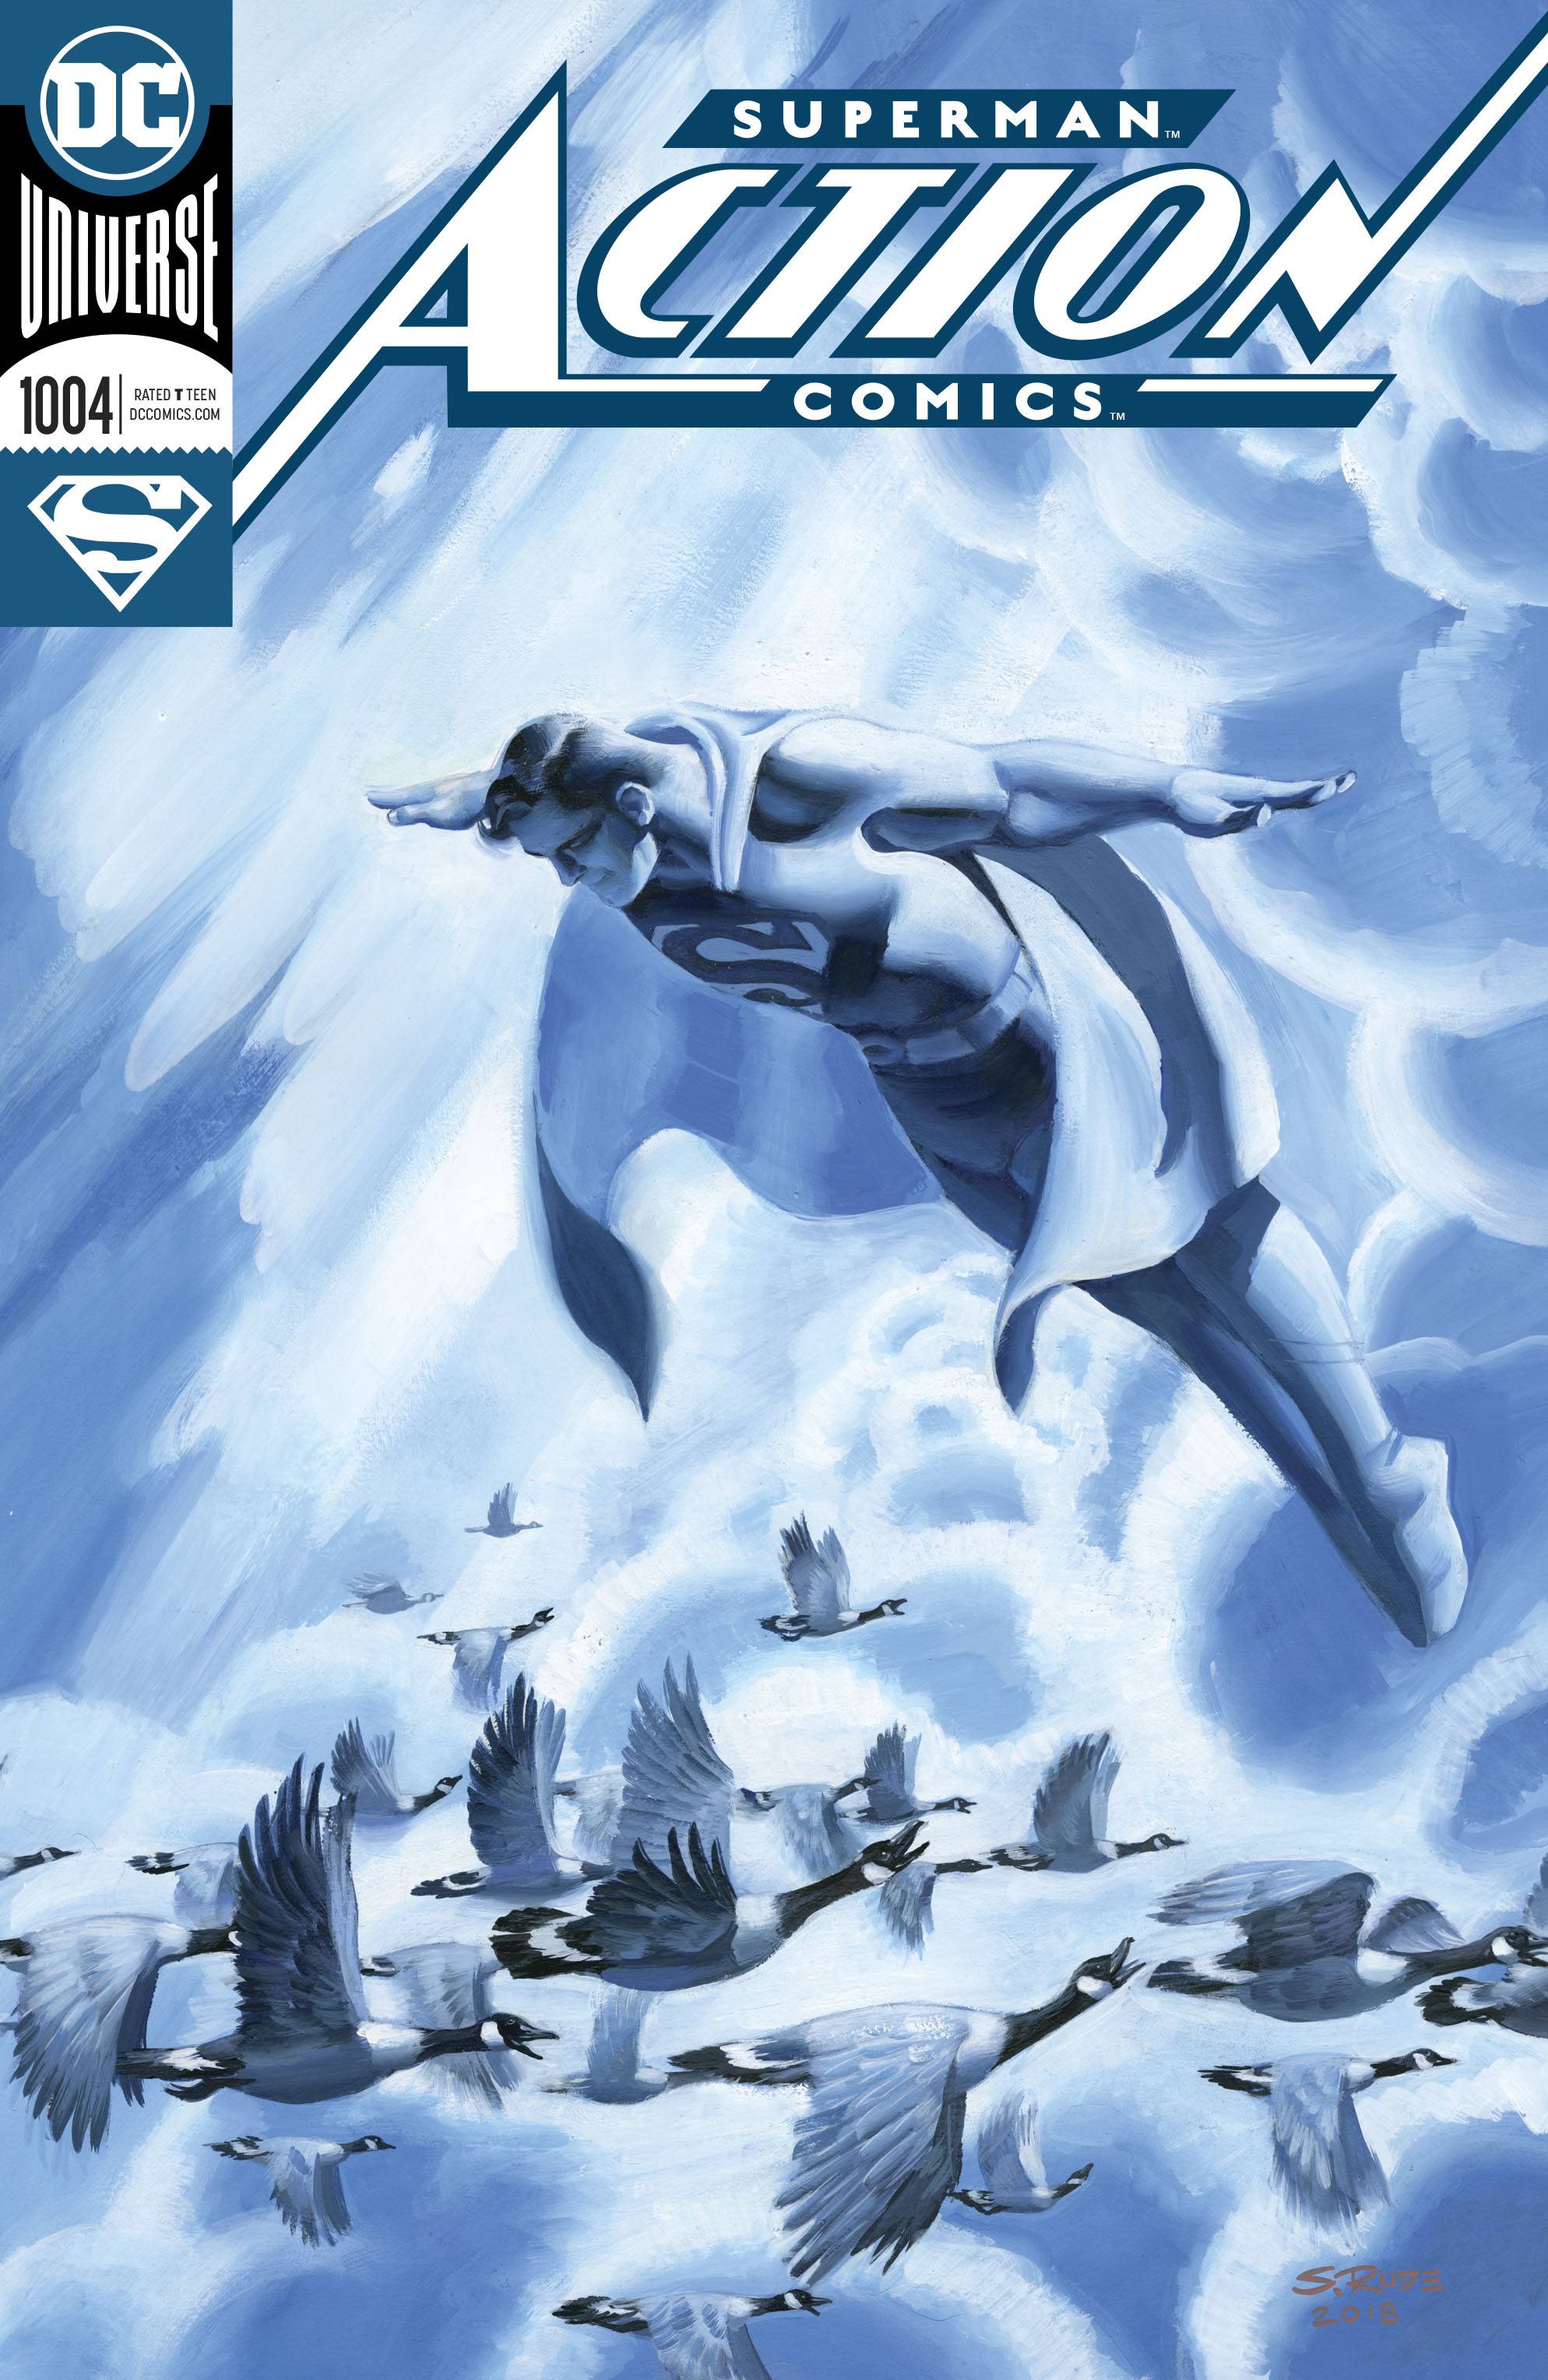 Action Comics comic issue 1004